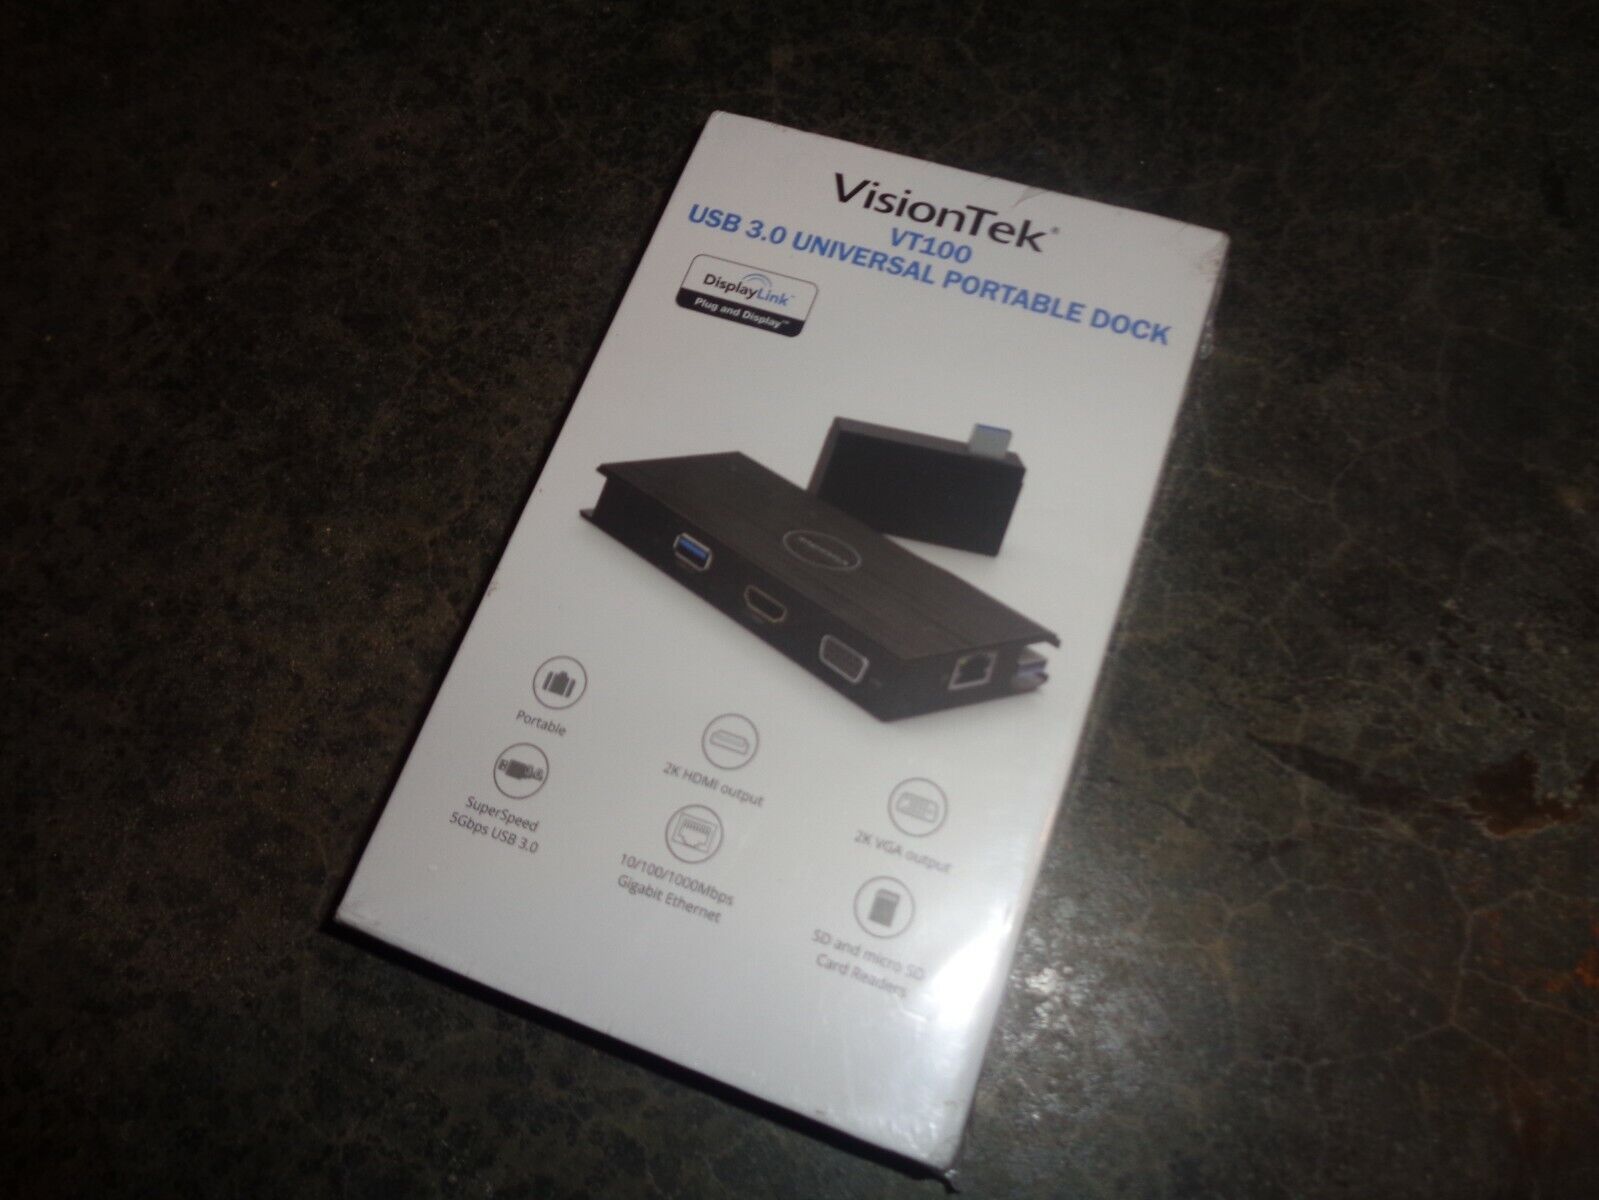 NEW *Visiontek* VT1000 USB 3.0 Universal Portable 901200 Dock Sealed